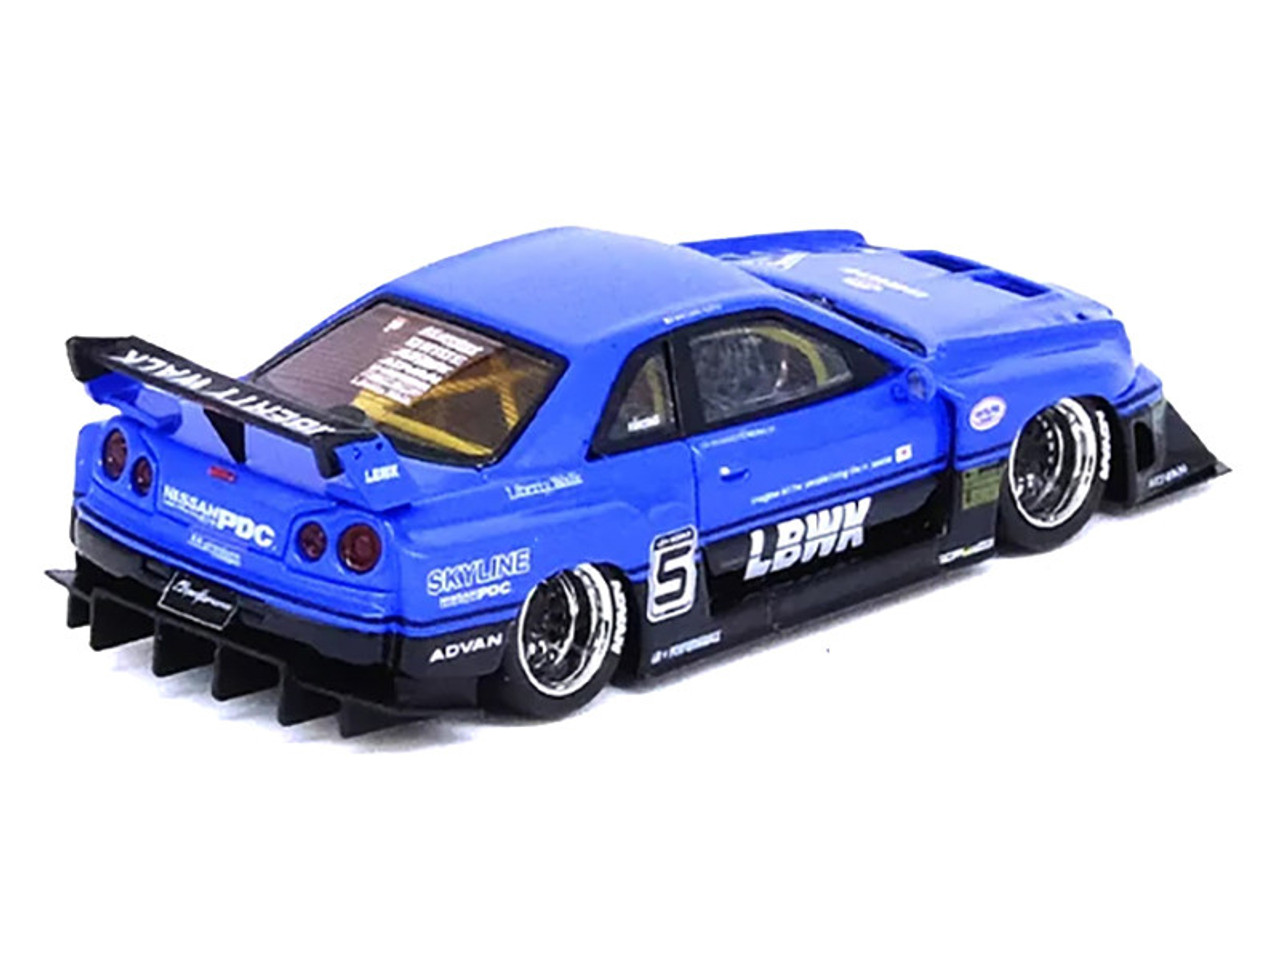 Nissan Skyline "LBWK" (ER34) Super Silhouette #5 RHD (Right Hand Drive) Blue Metallic "Inno64-R Resin" Series 1/64 Diecast Model Car by Inno Models